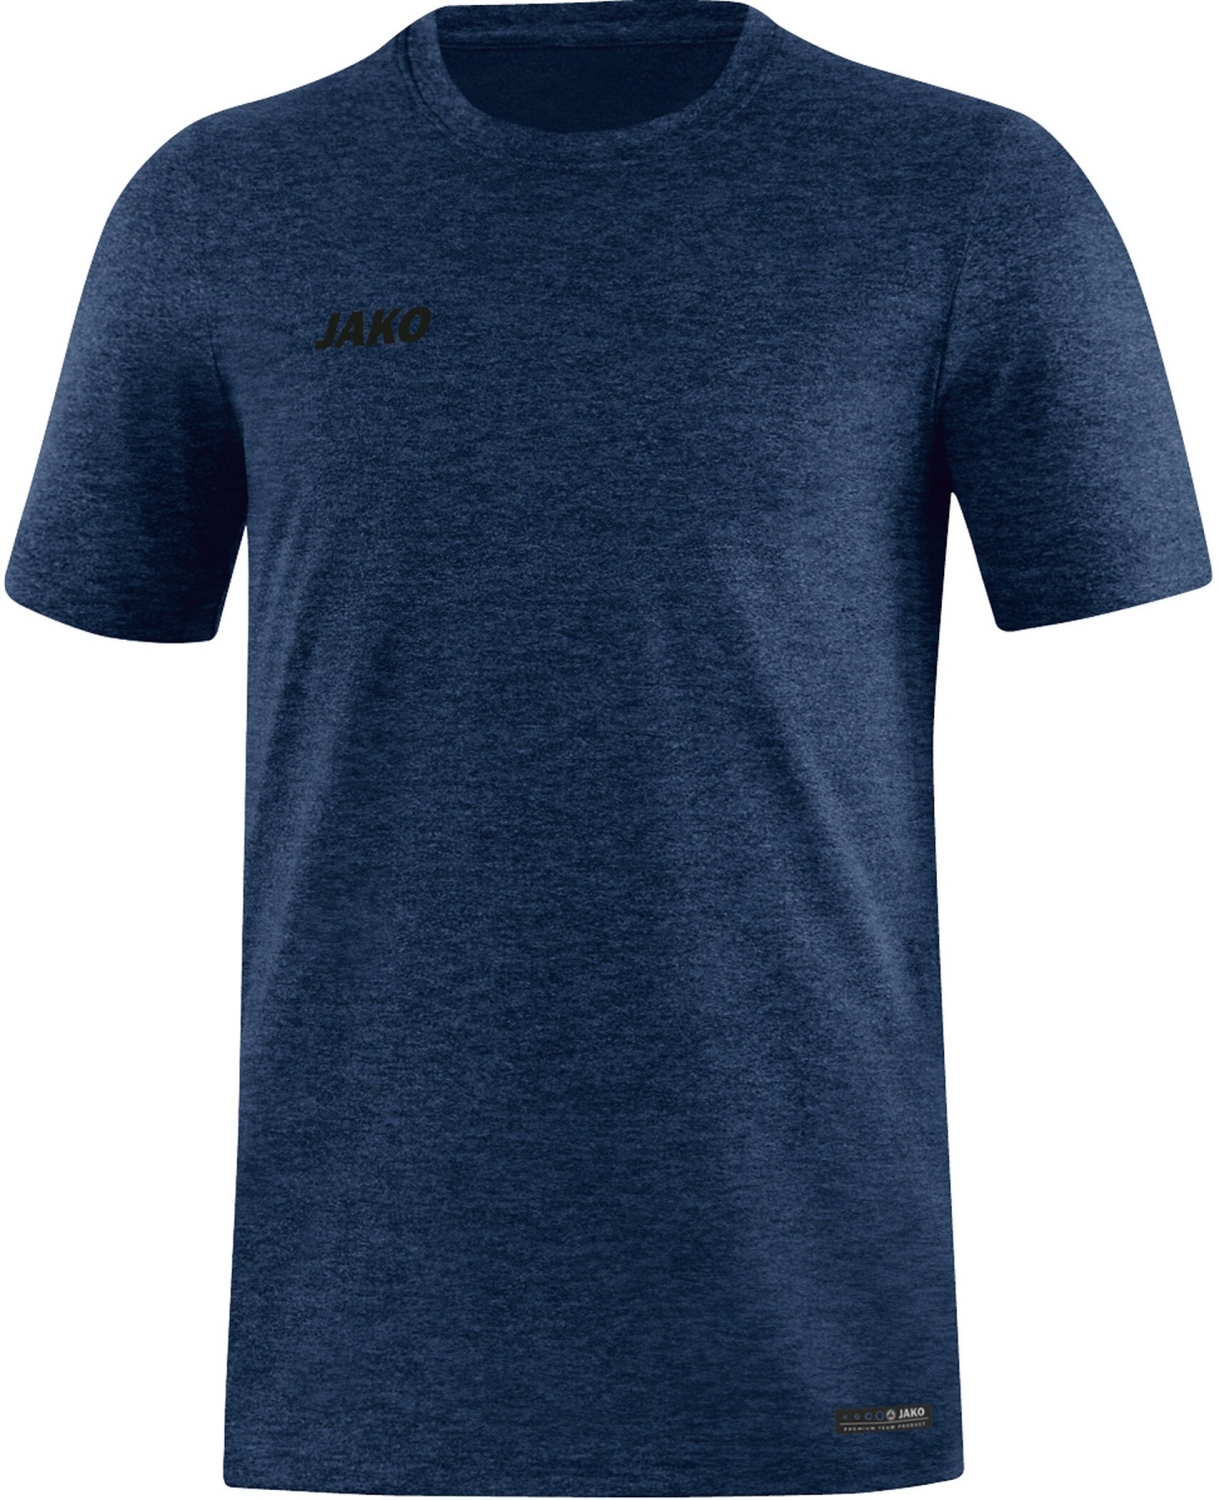 Herren T-Shirt Premium 